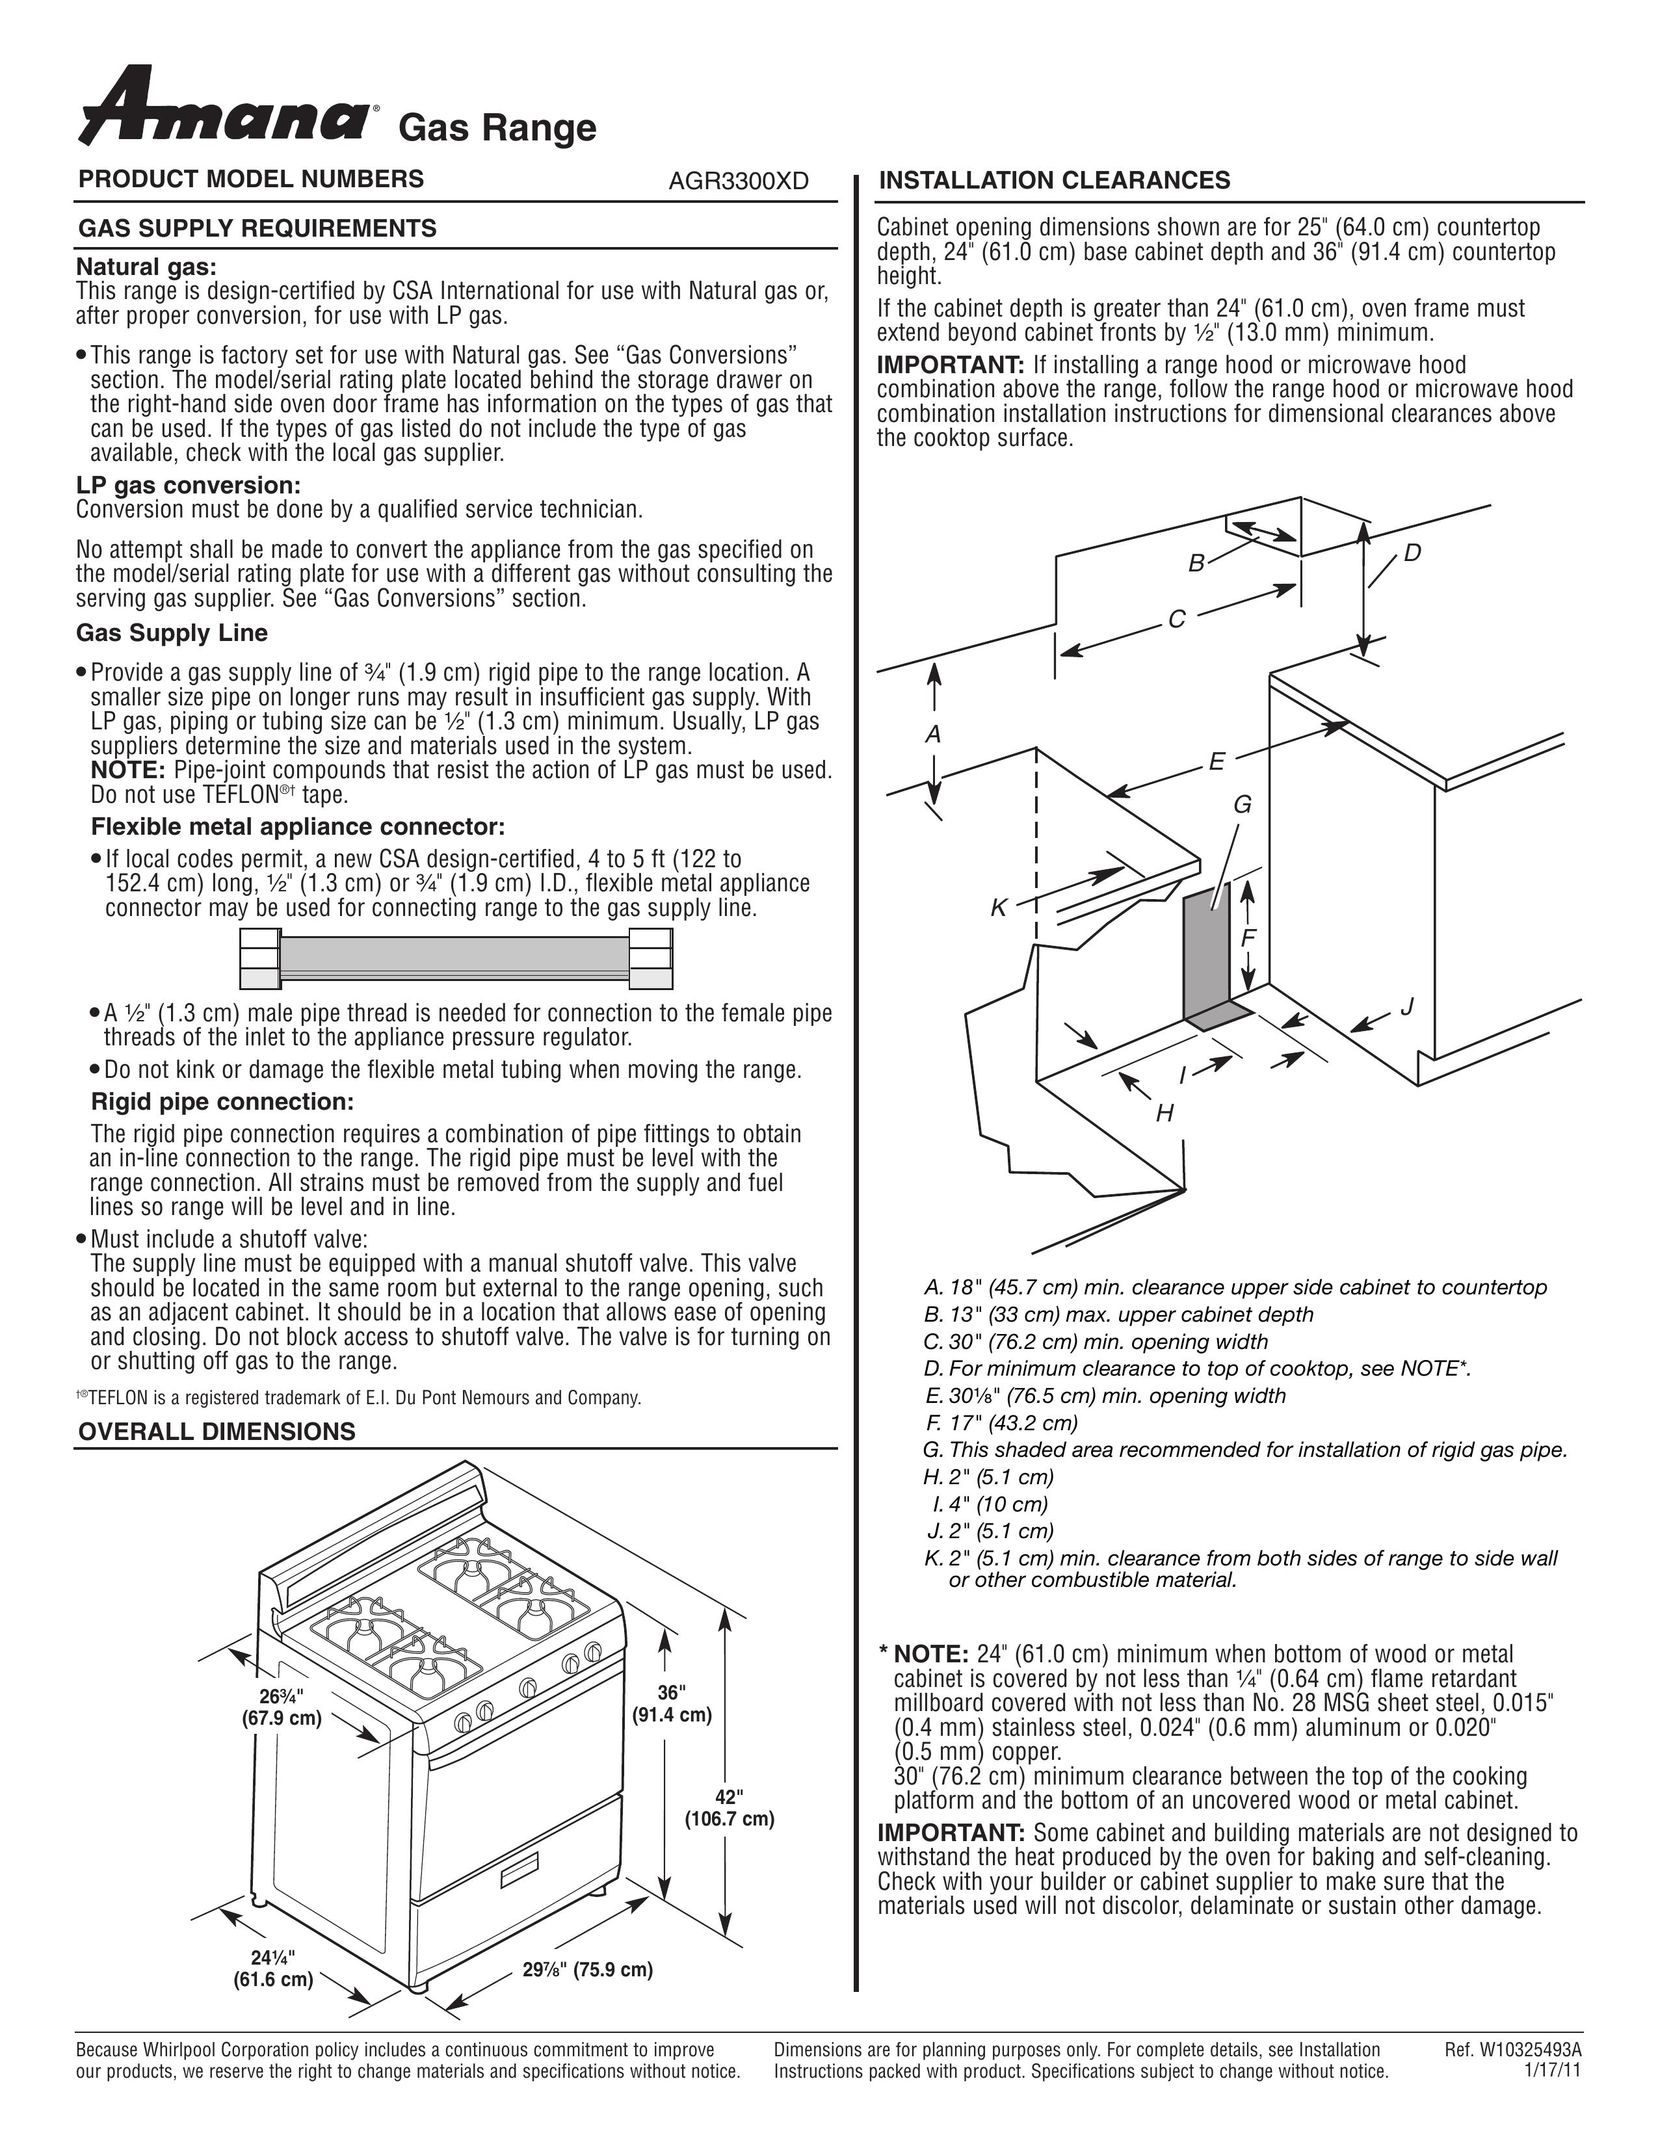 Amana AGR3300XD Range User Manual